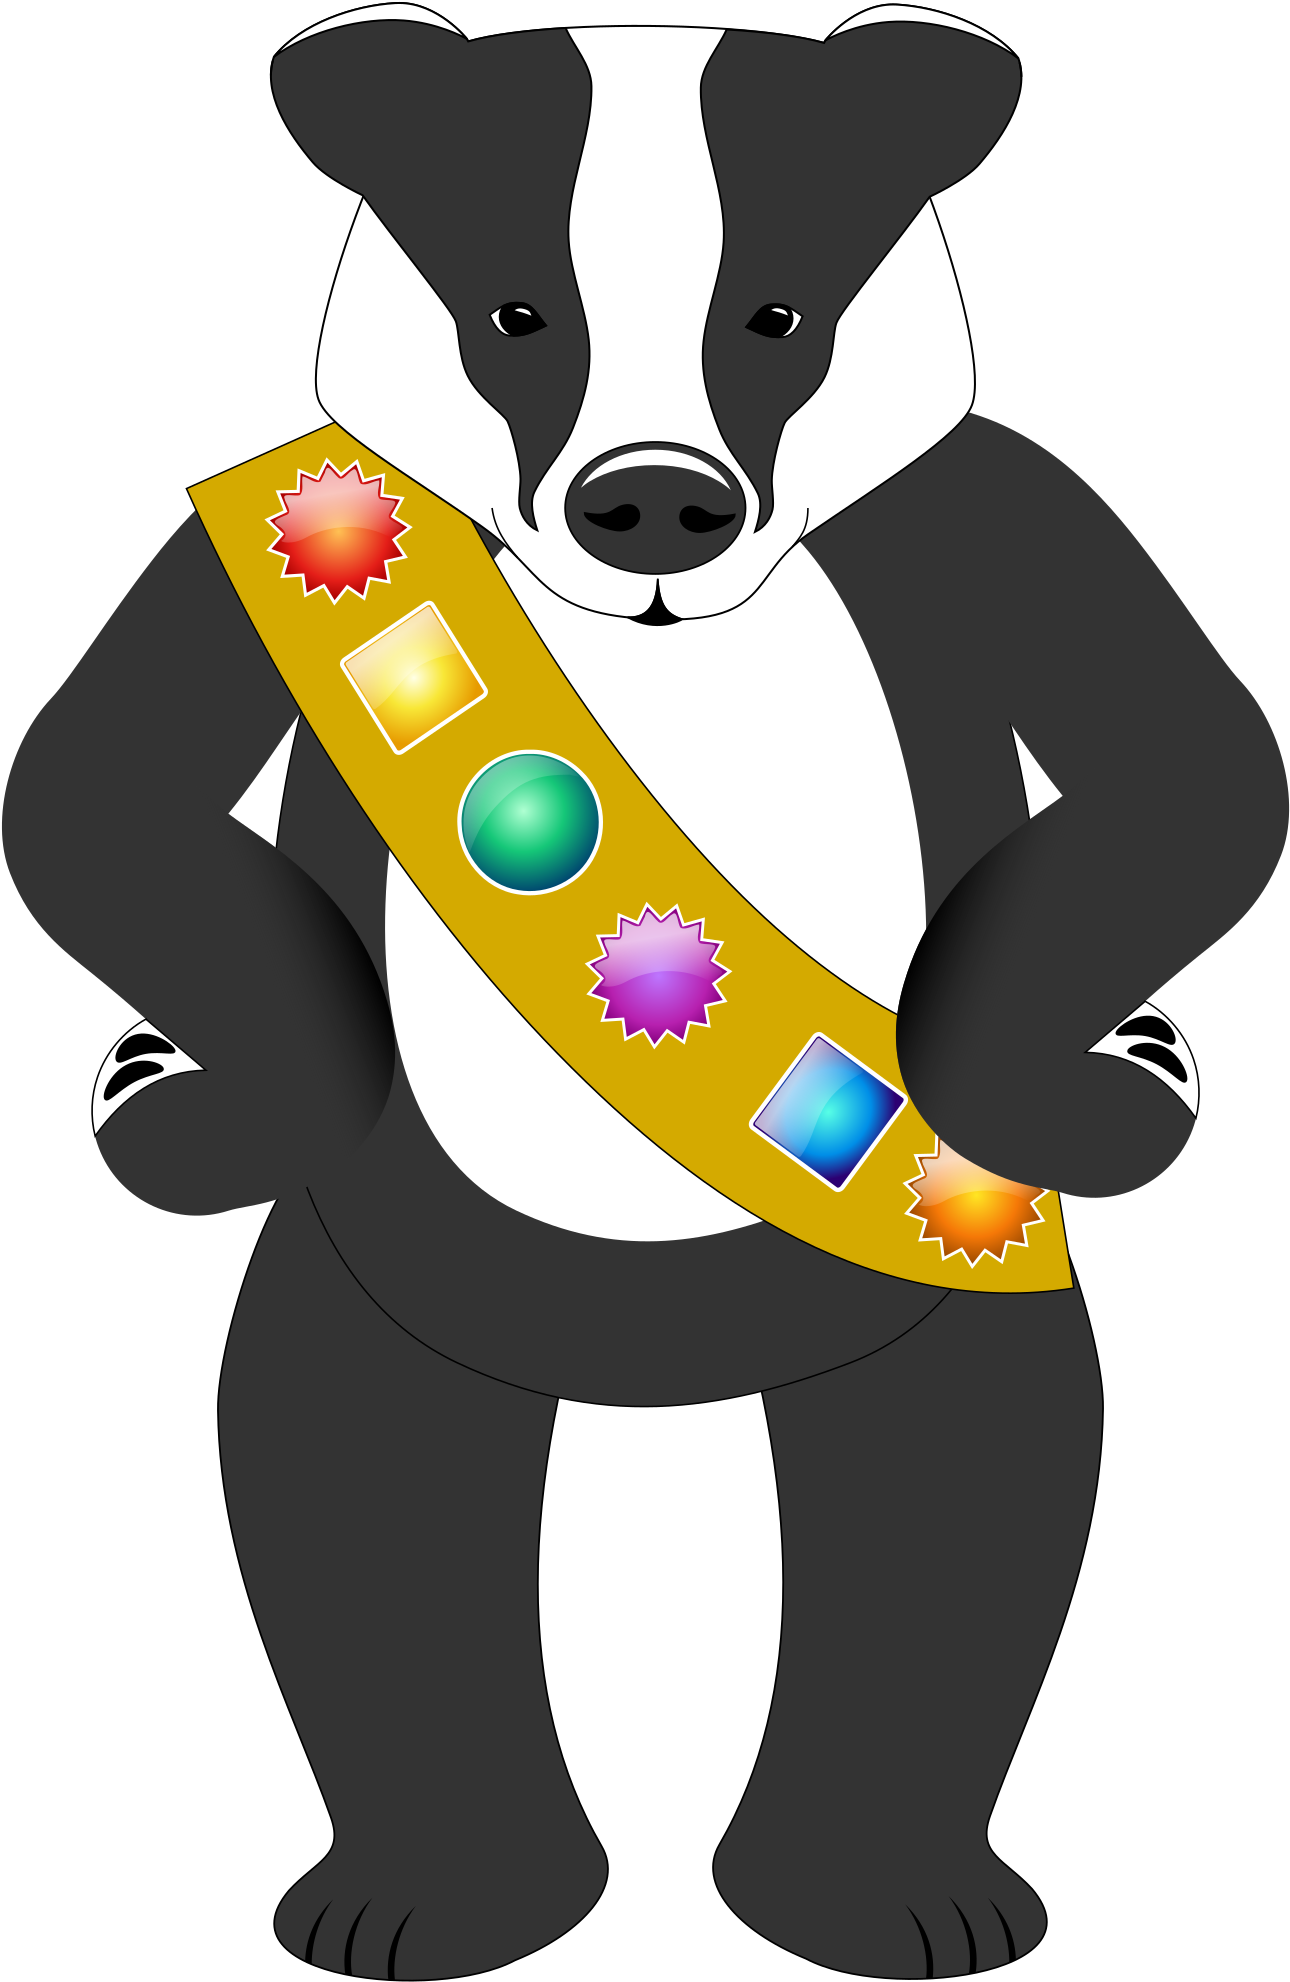 A Cartoon Panda With A Yellow Sash